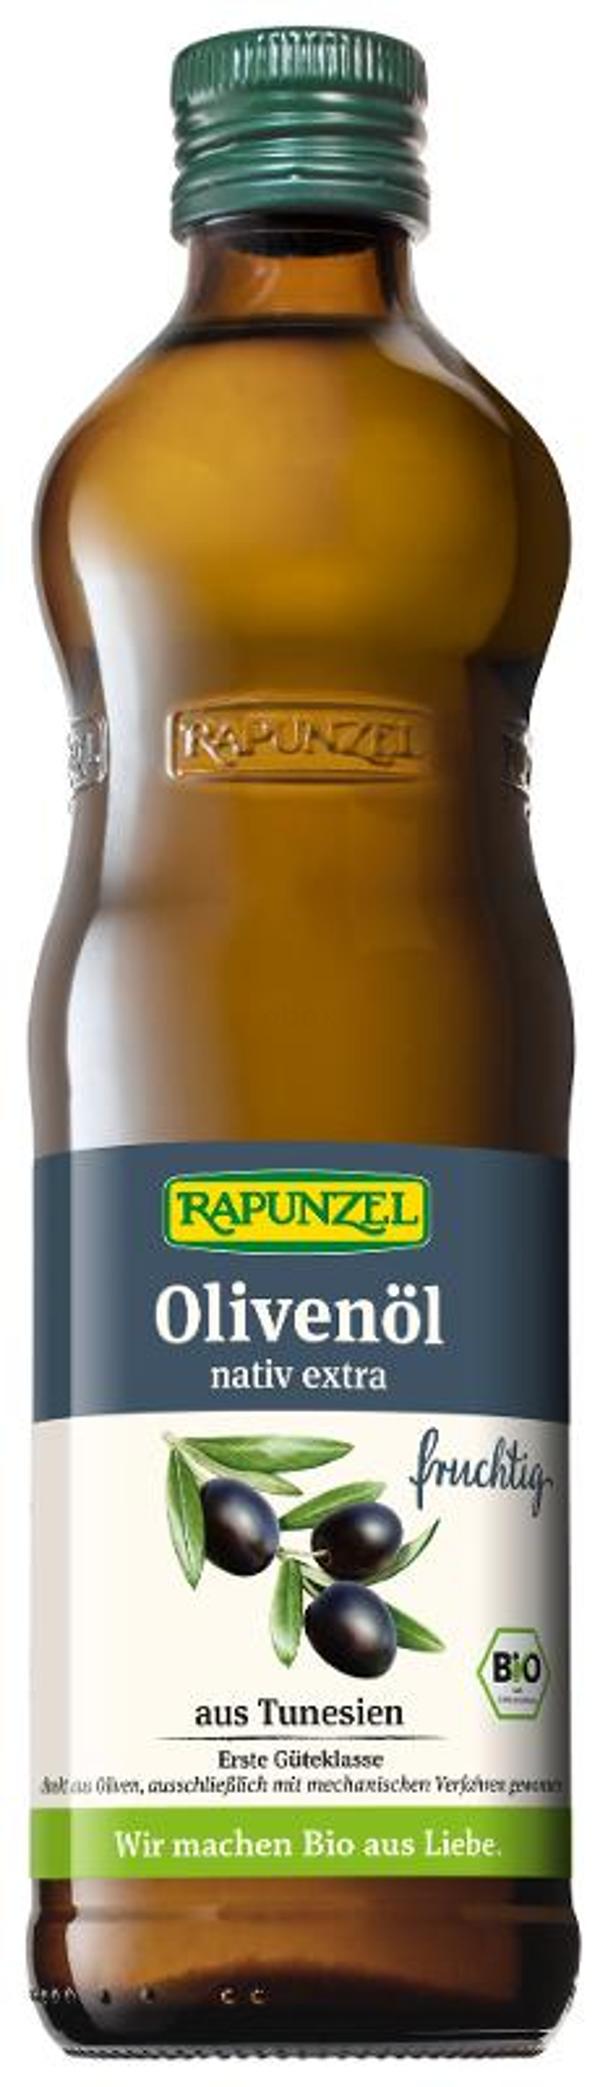 Produktfoto zu Olivenöl 0,5 l